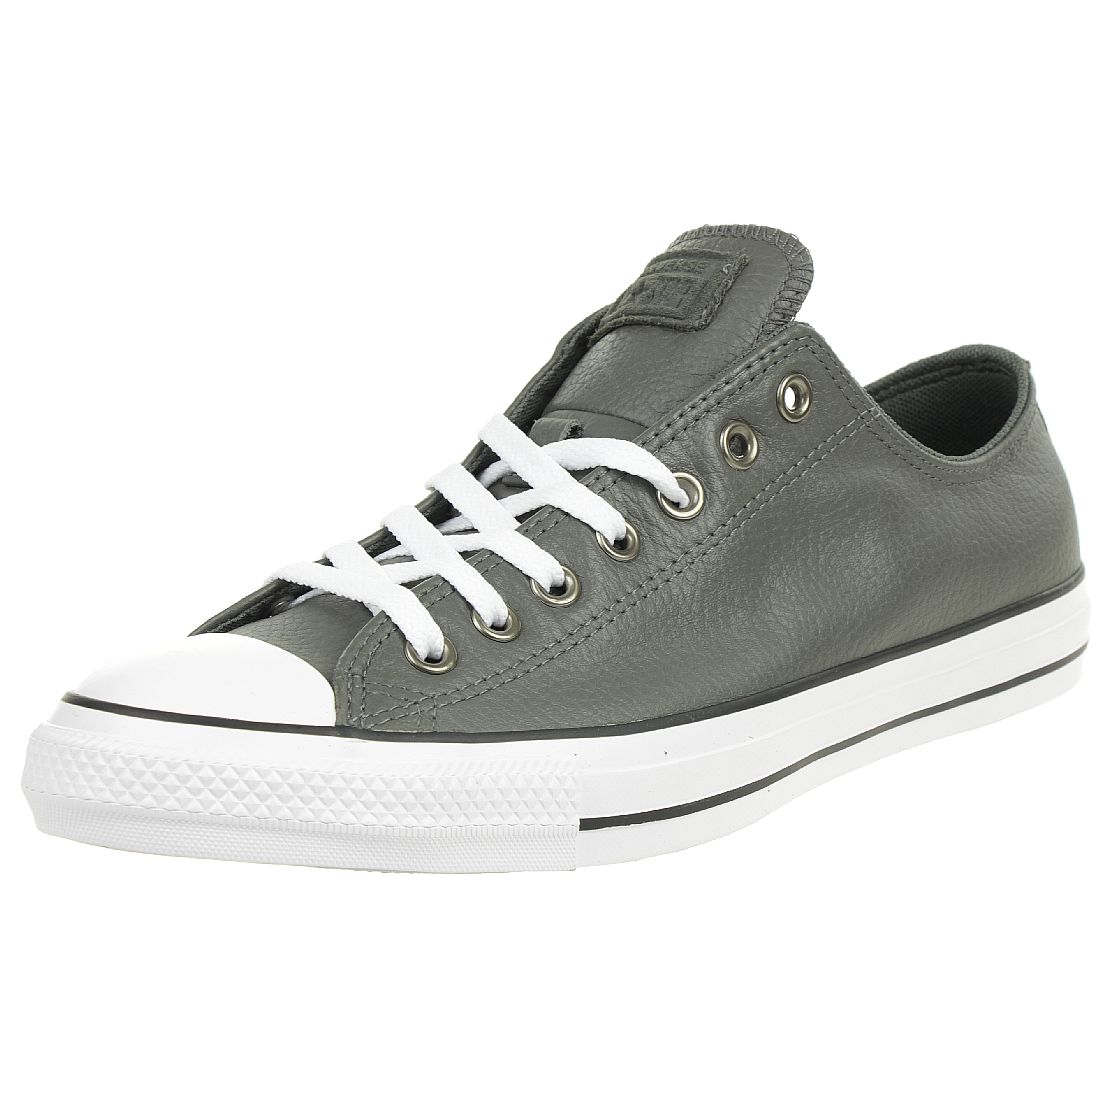 Converse CTAS OX Chuck Schuhe Leder Sneaker Carbon Grau 165193C 36.5 EU